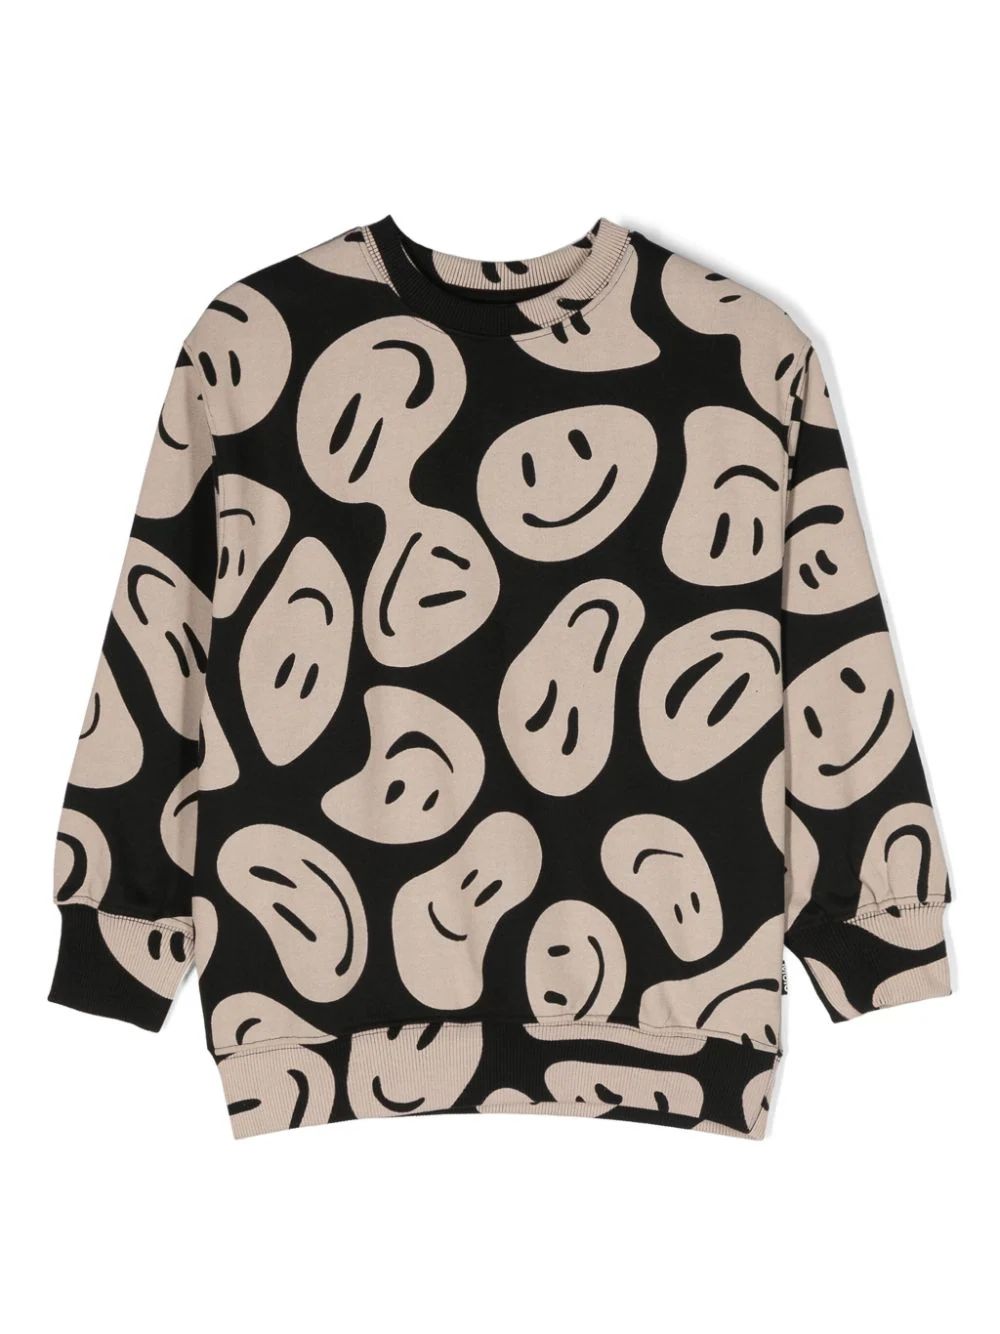 Monti smiley-face print sweatshirt | Farfetch Global